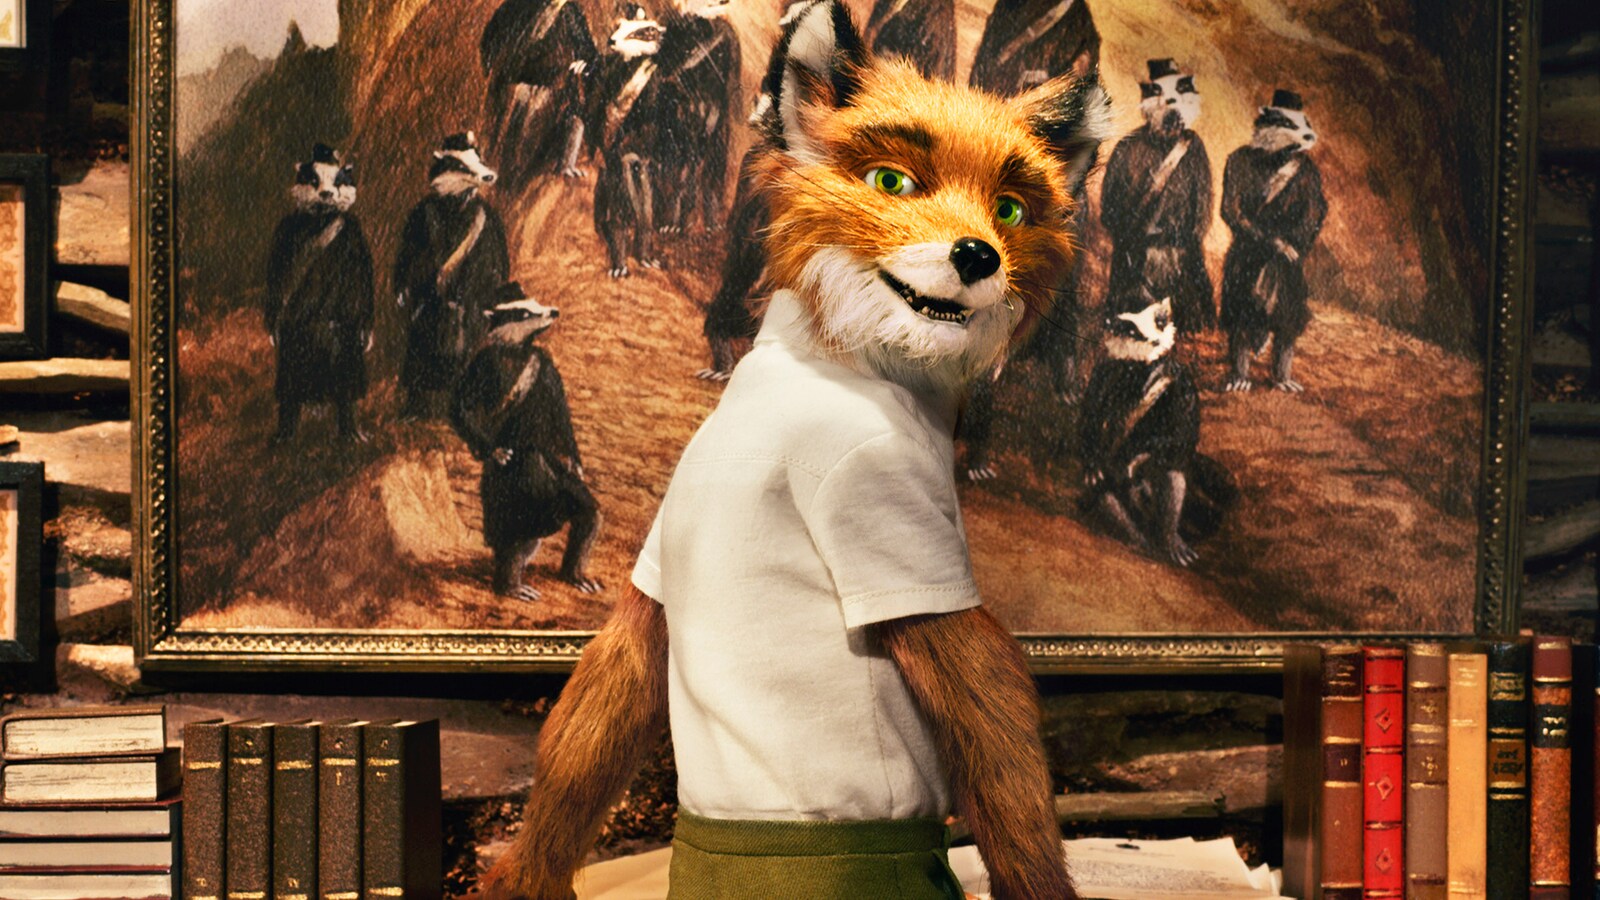 fantastic-mr.-fox-2009